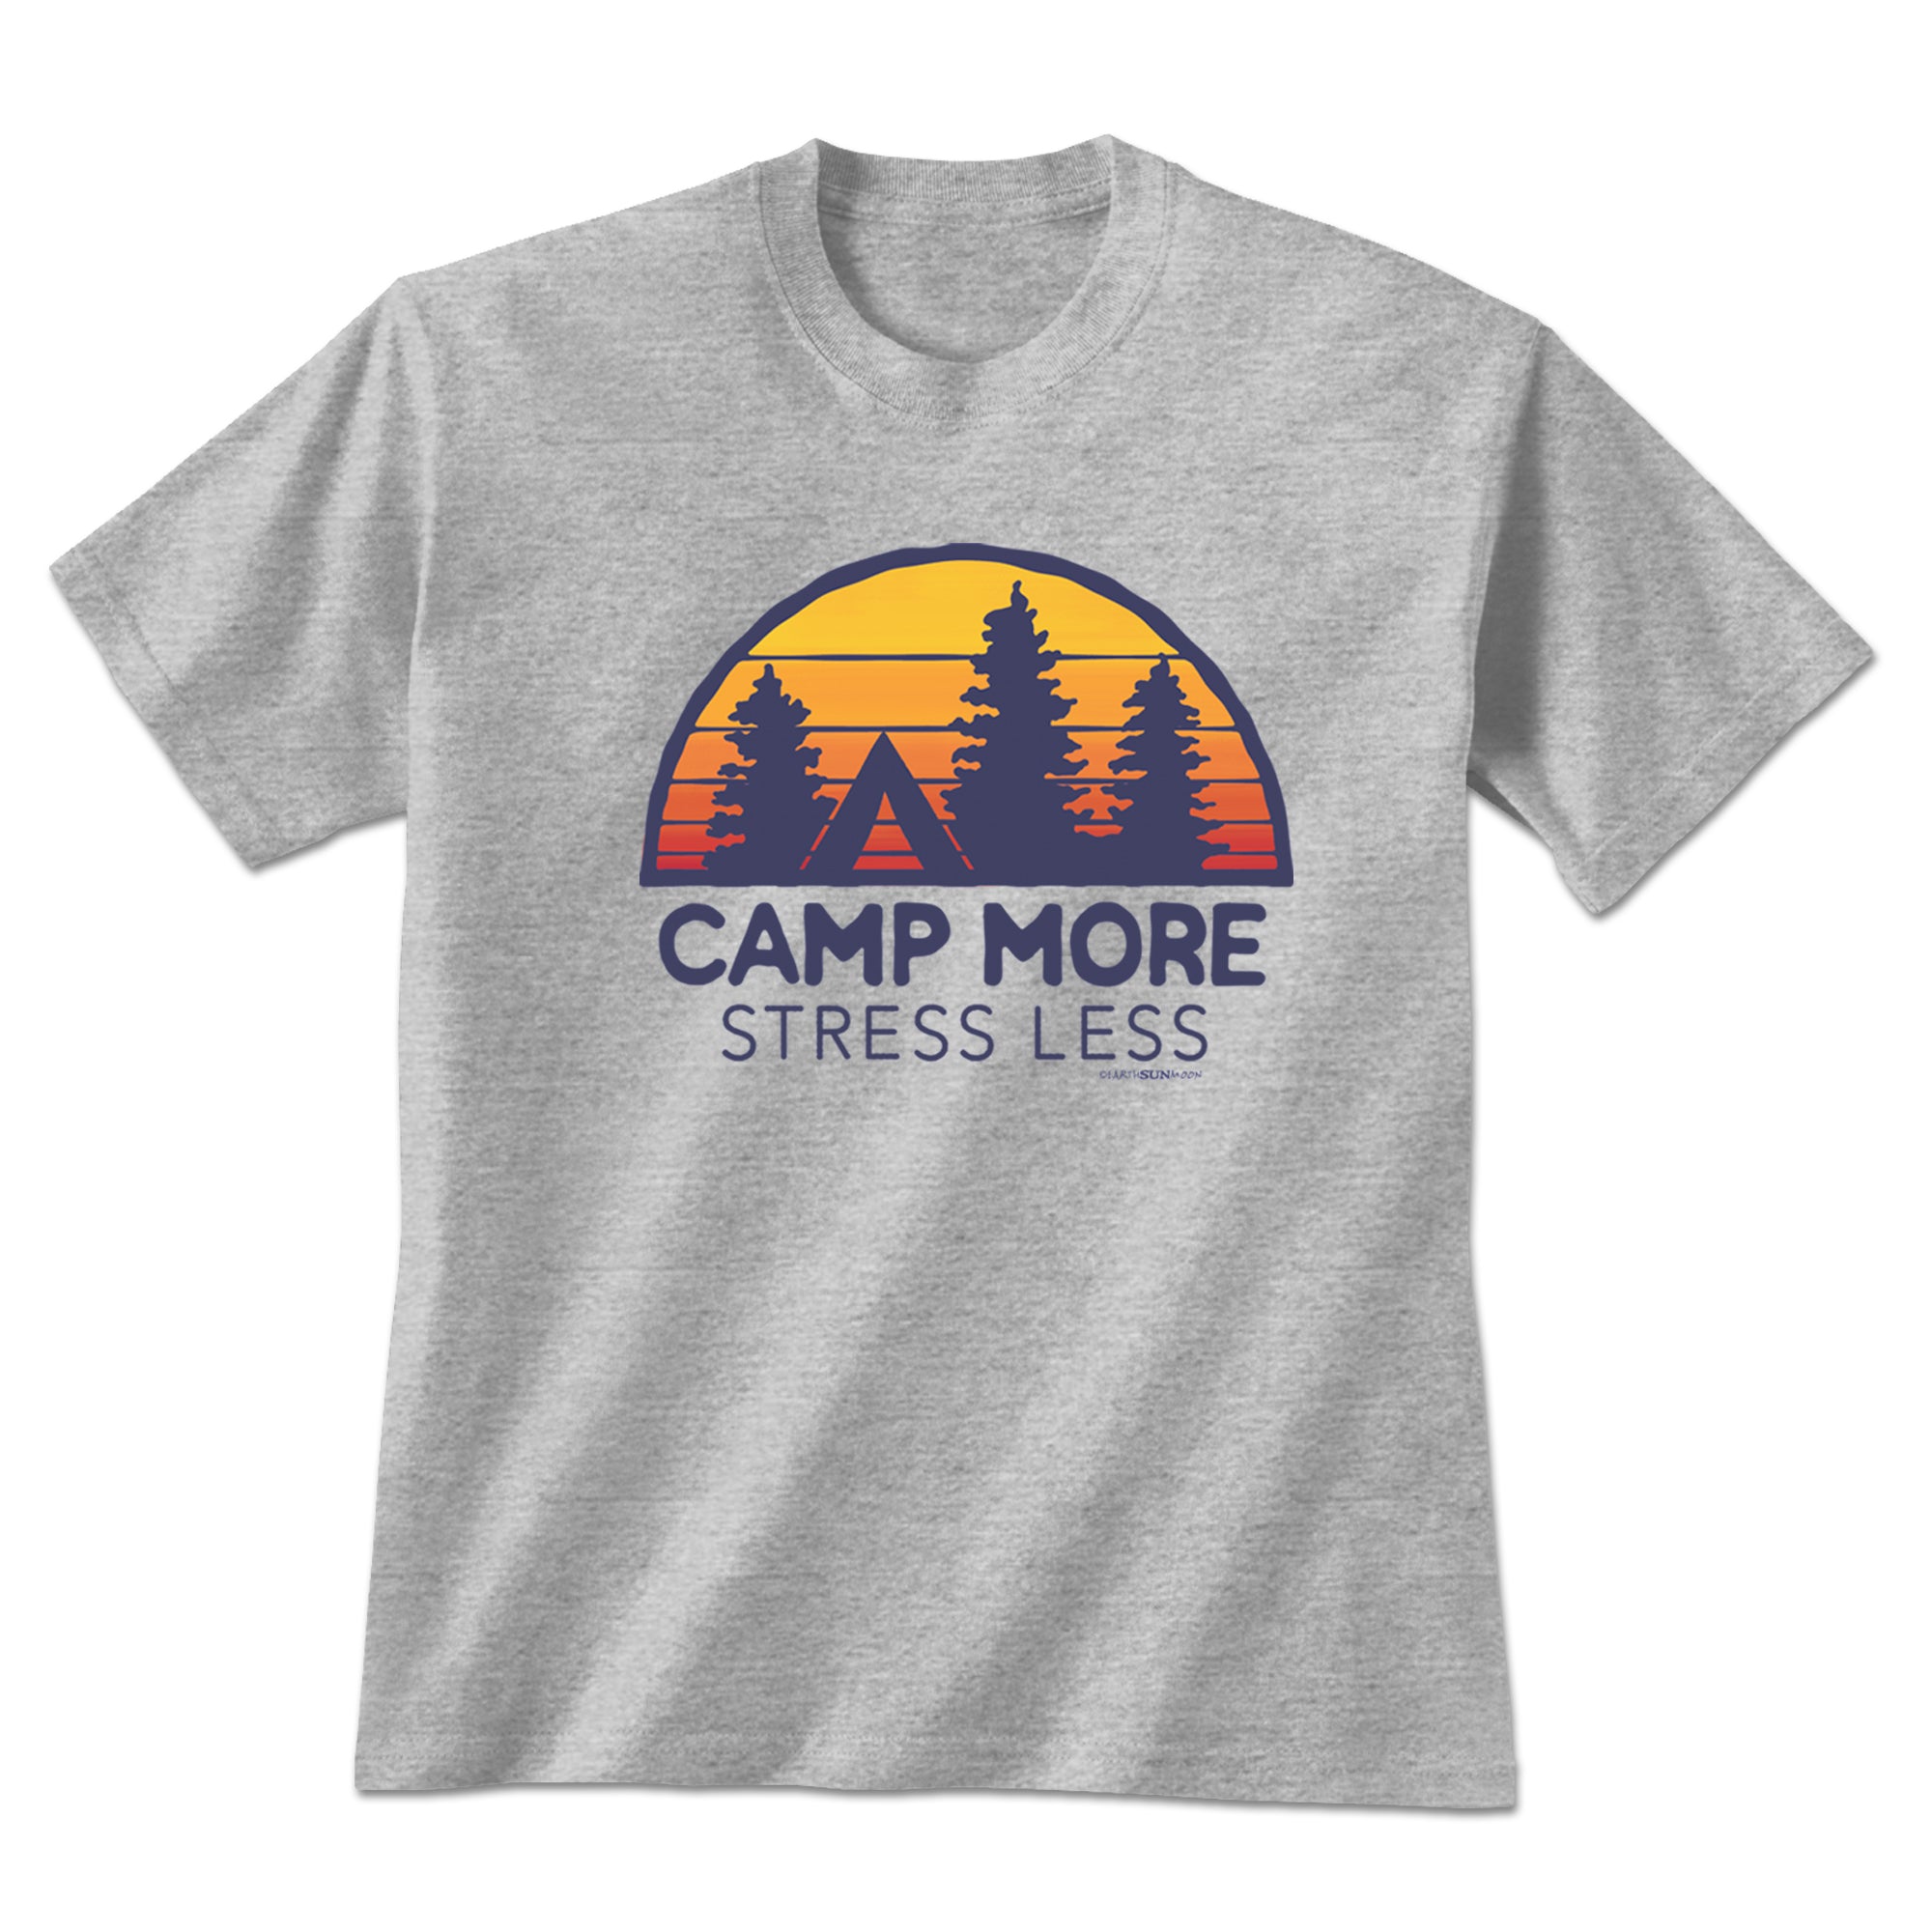 Camp More Stress Less T-Shirt - Sports Grey - XL